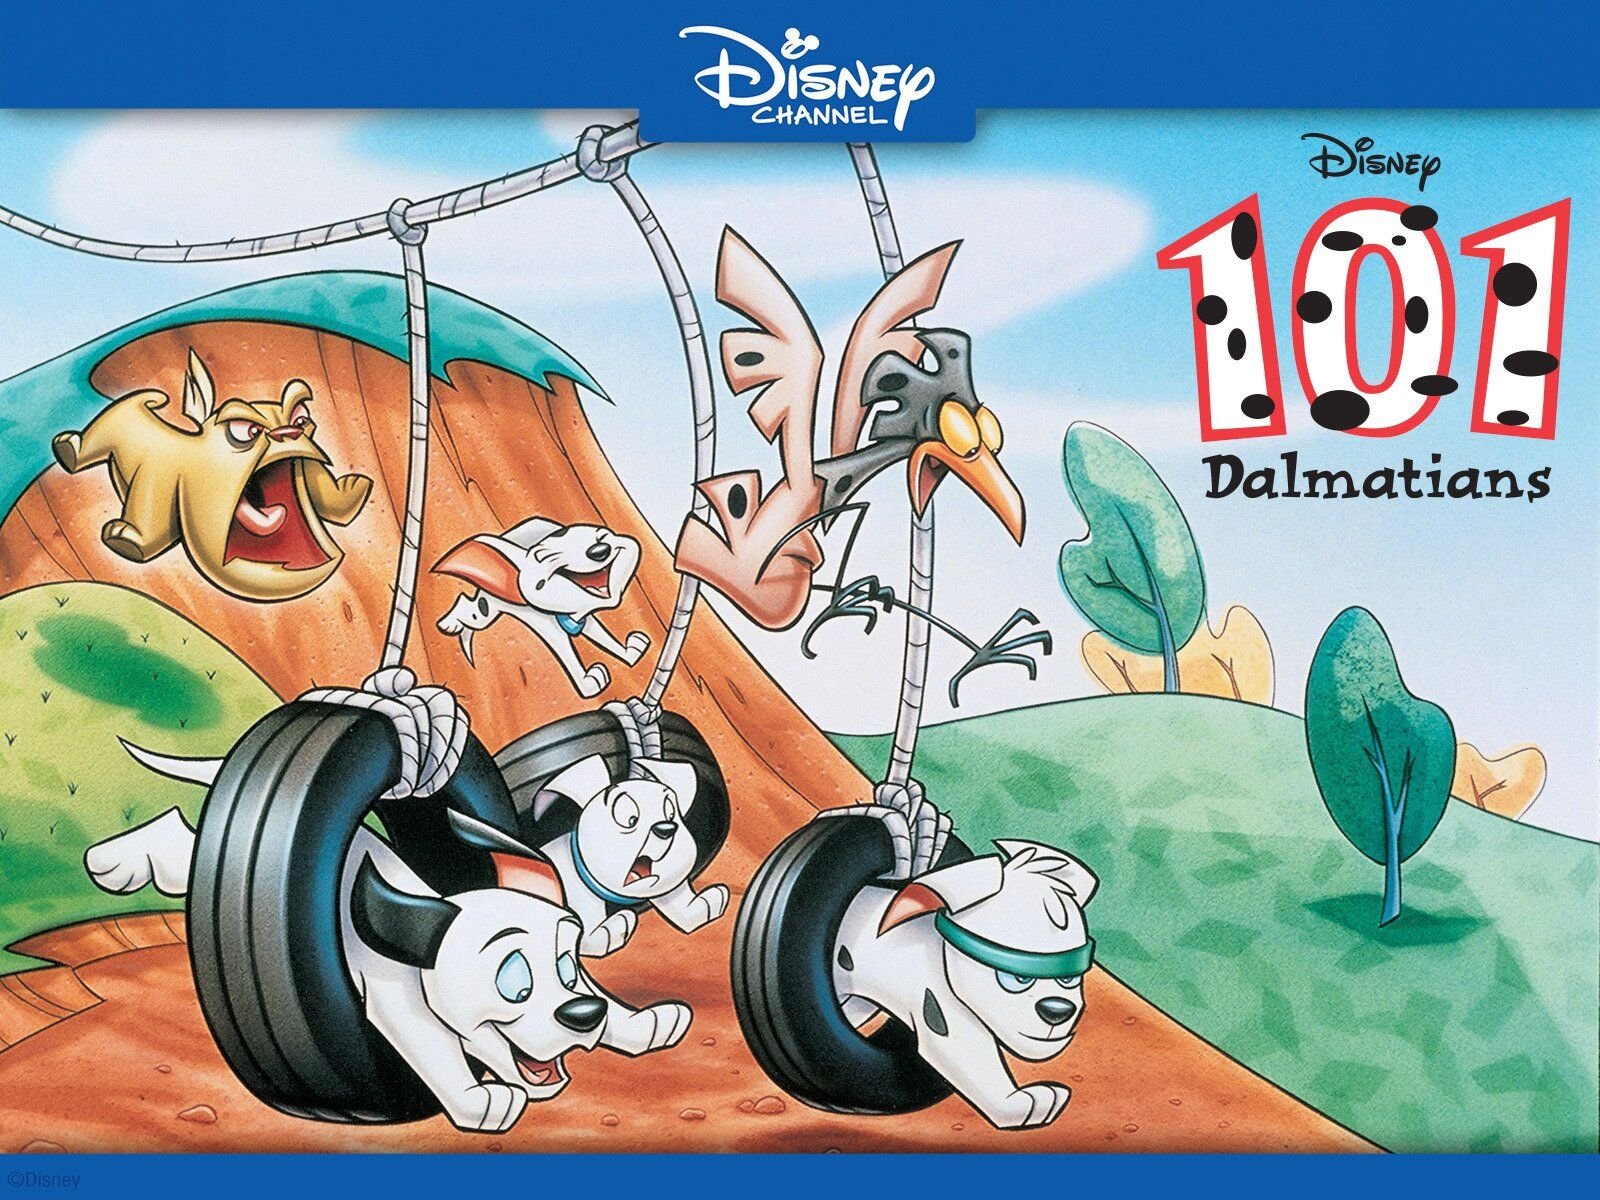 Dalmatians: The Series. The New Toon Disney & Jetix